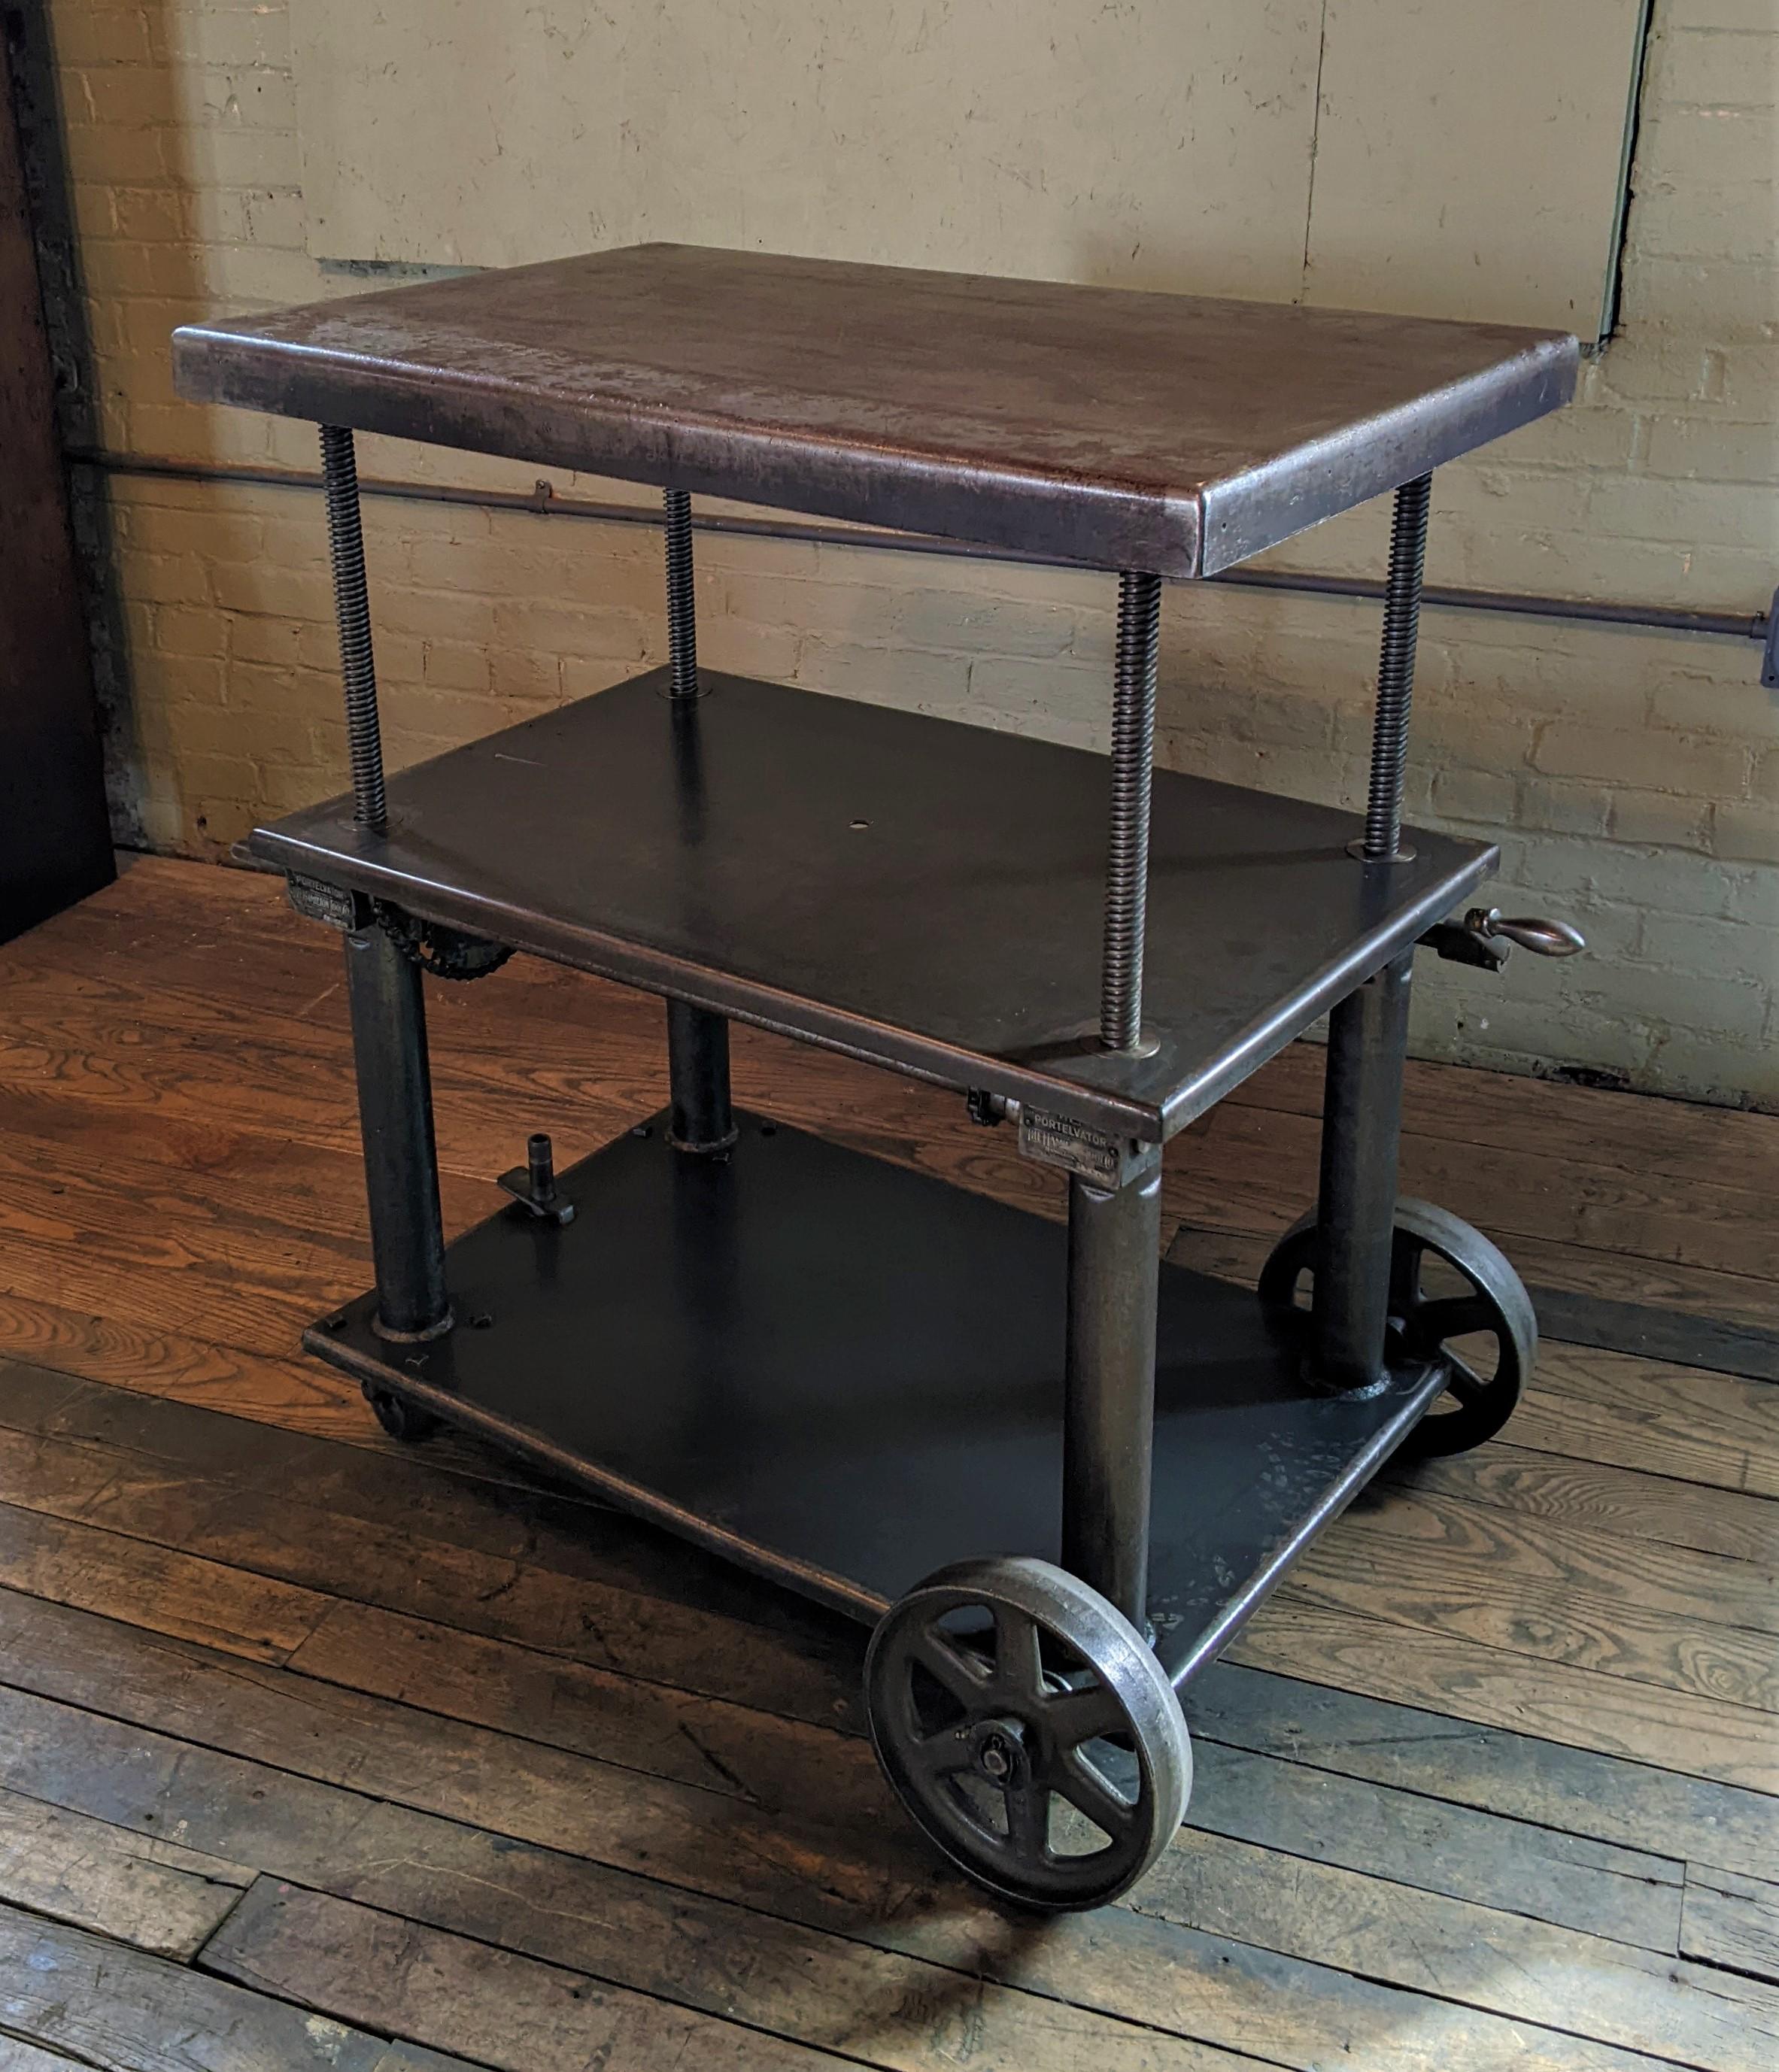 Vintage Industrial Adjustable Metal Die Lift Cart / Table

Overall Dimensions: 25 3/4